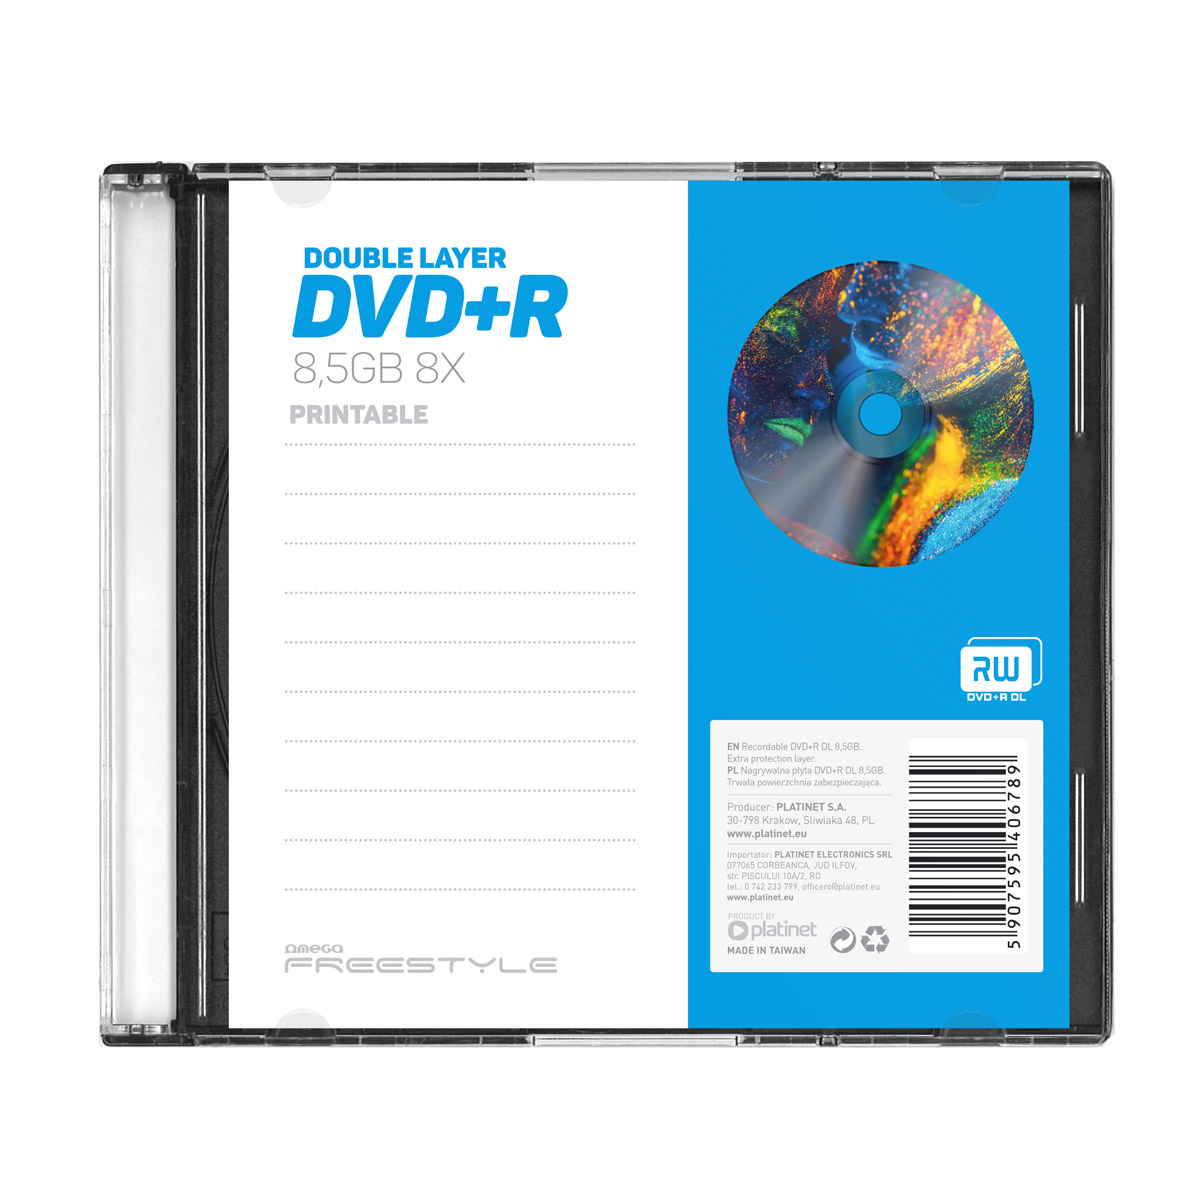 DVD+R DUPLO LAYER 8.5GB 8X OMEGA IMPRIMÍVEL SLIM*1 40678 OMDFDL8S1P